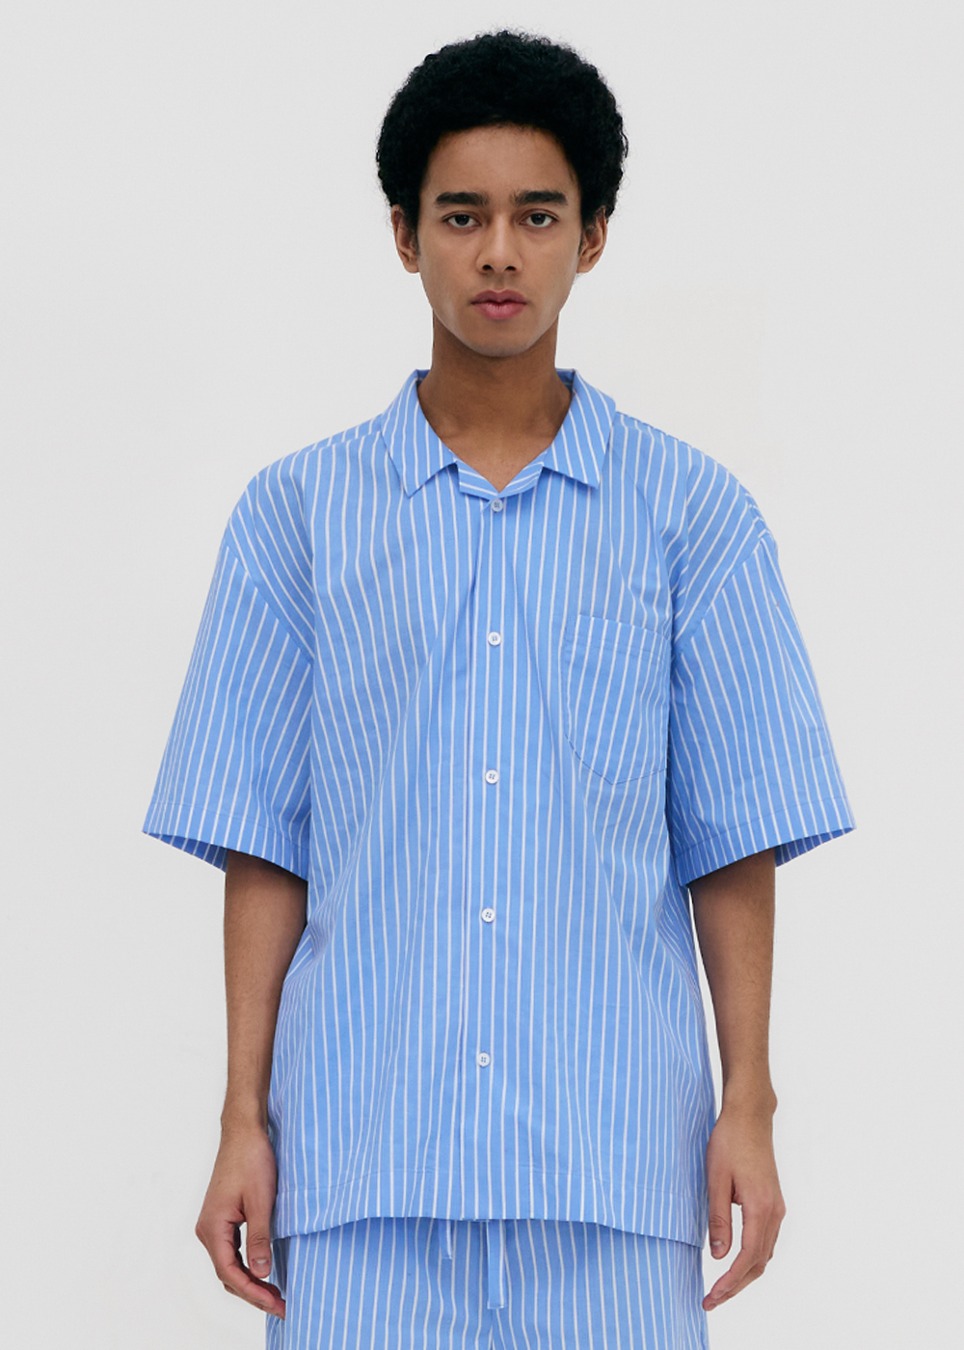 Stay Stripe Pajamas Short Sleeve Shirt - Light Blue